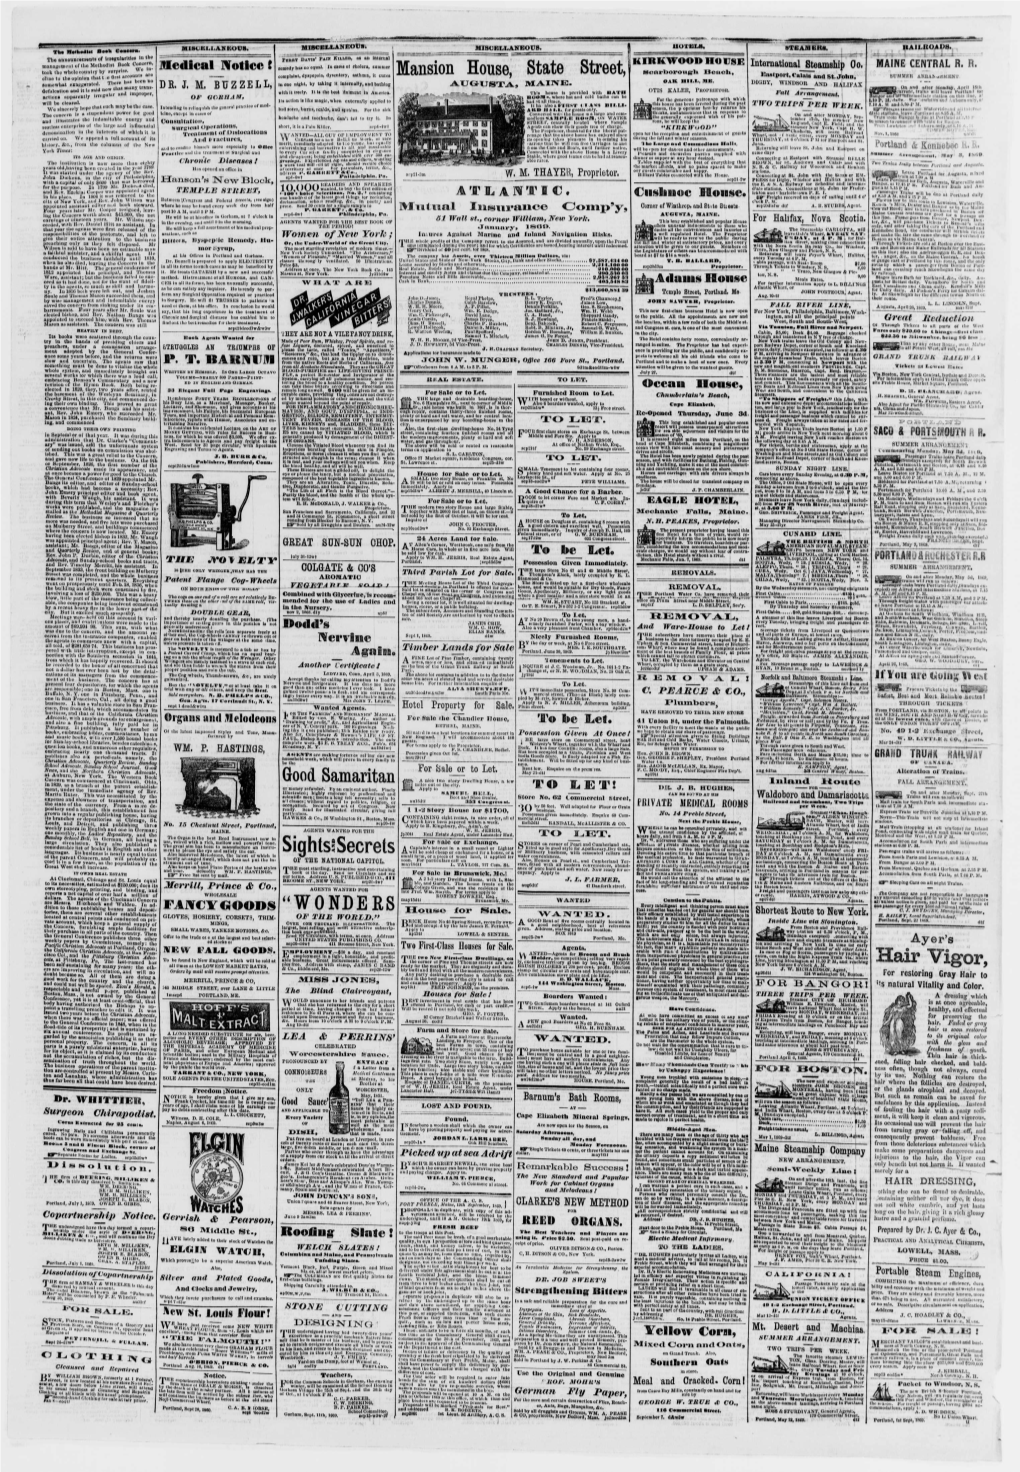 Portland Daily Press (Portland, Me.). 1869-09-29 [P ]